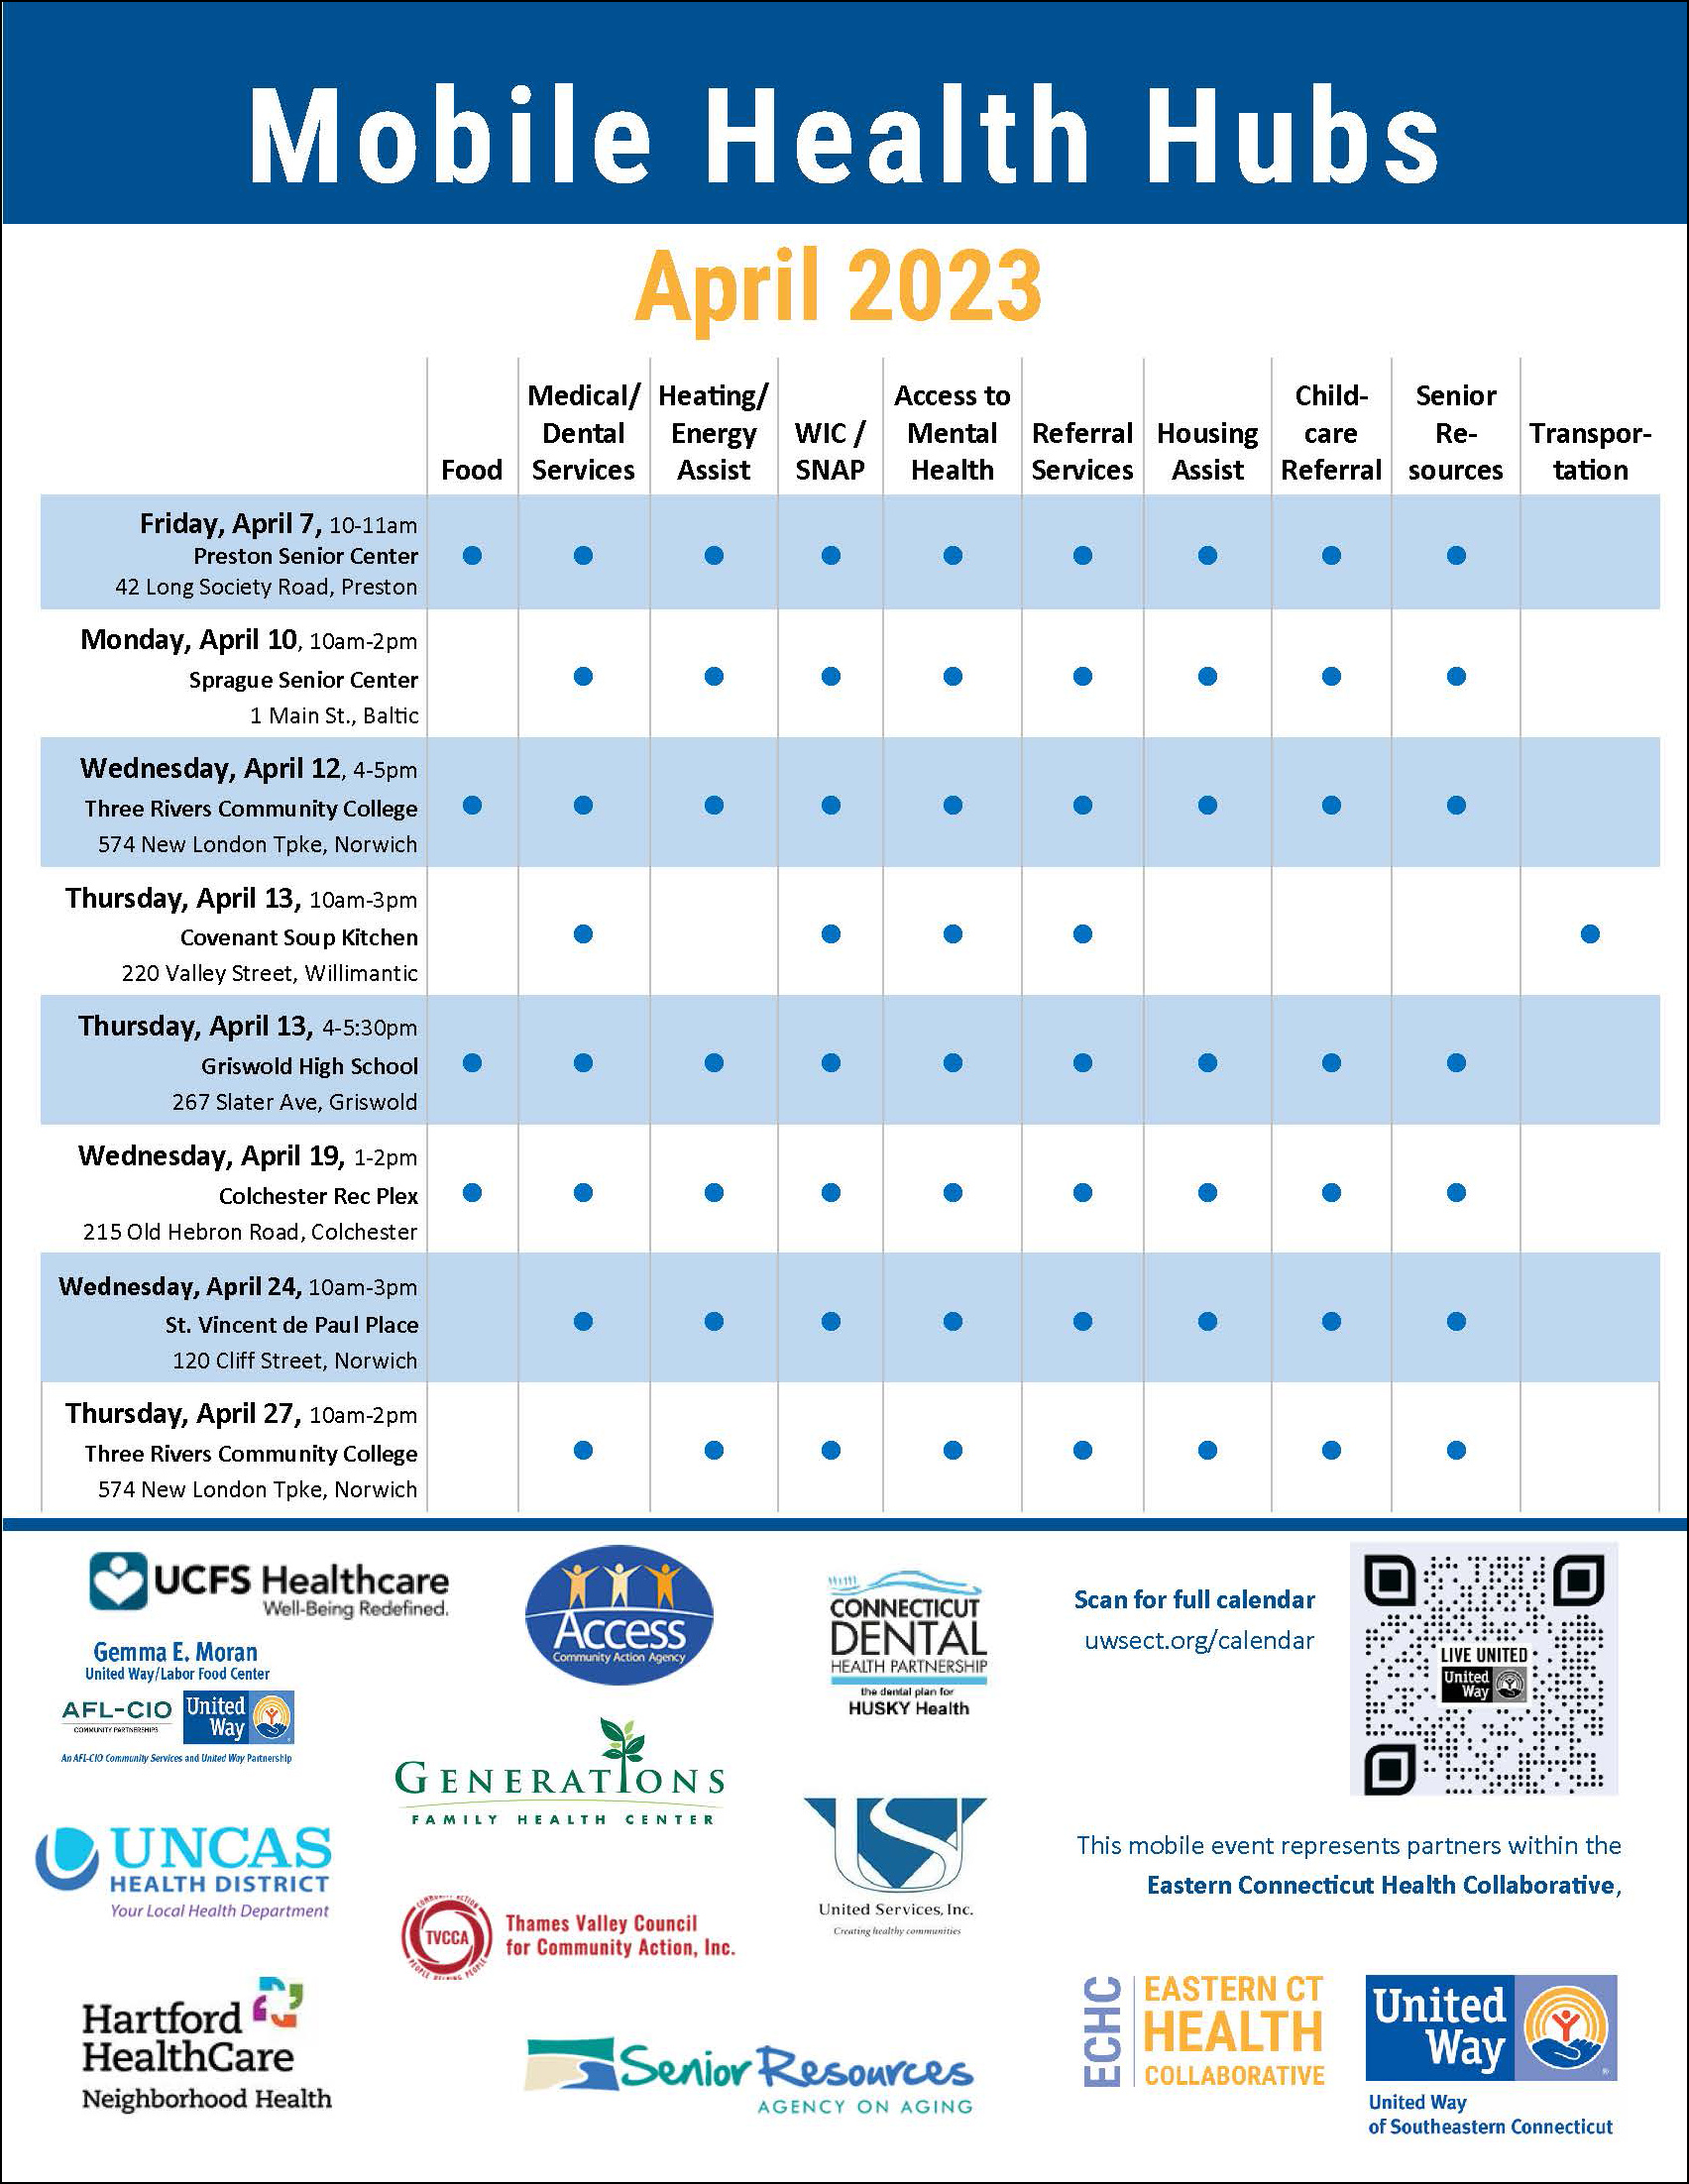 April 2023 Mobile Health Hub schedule